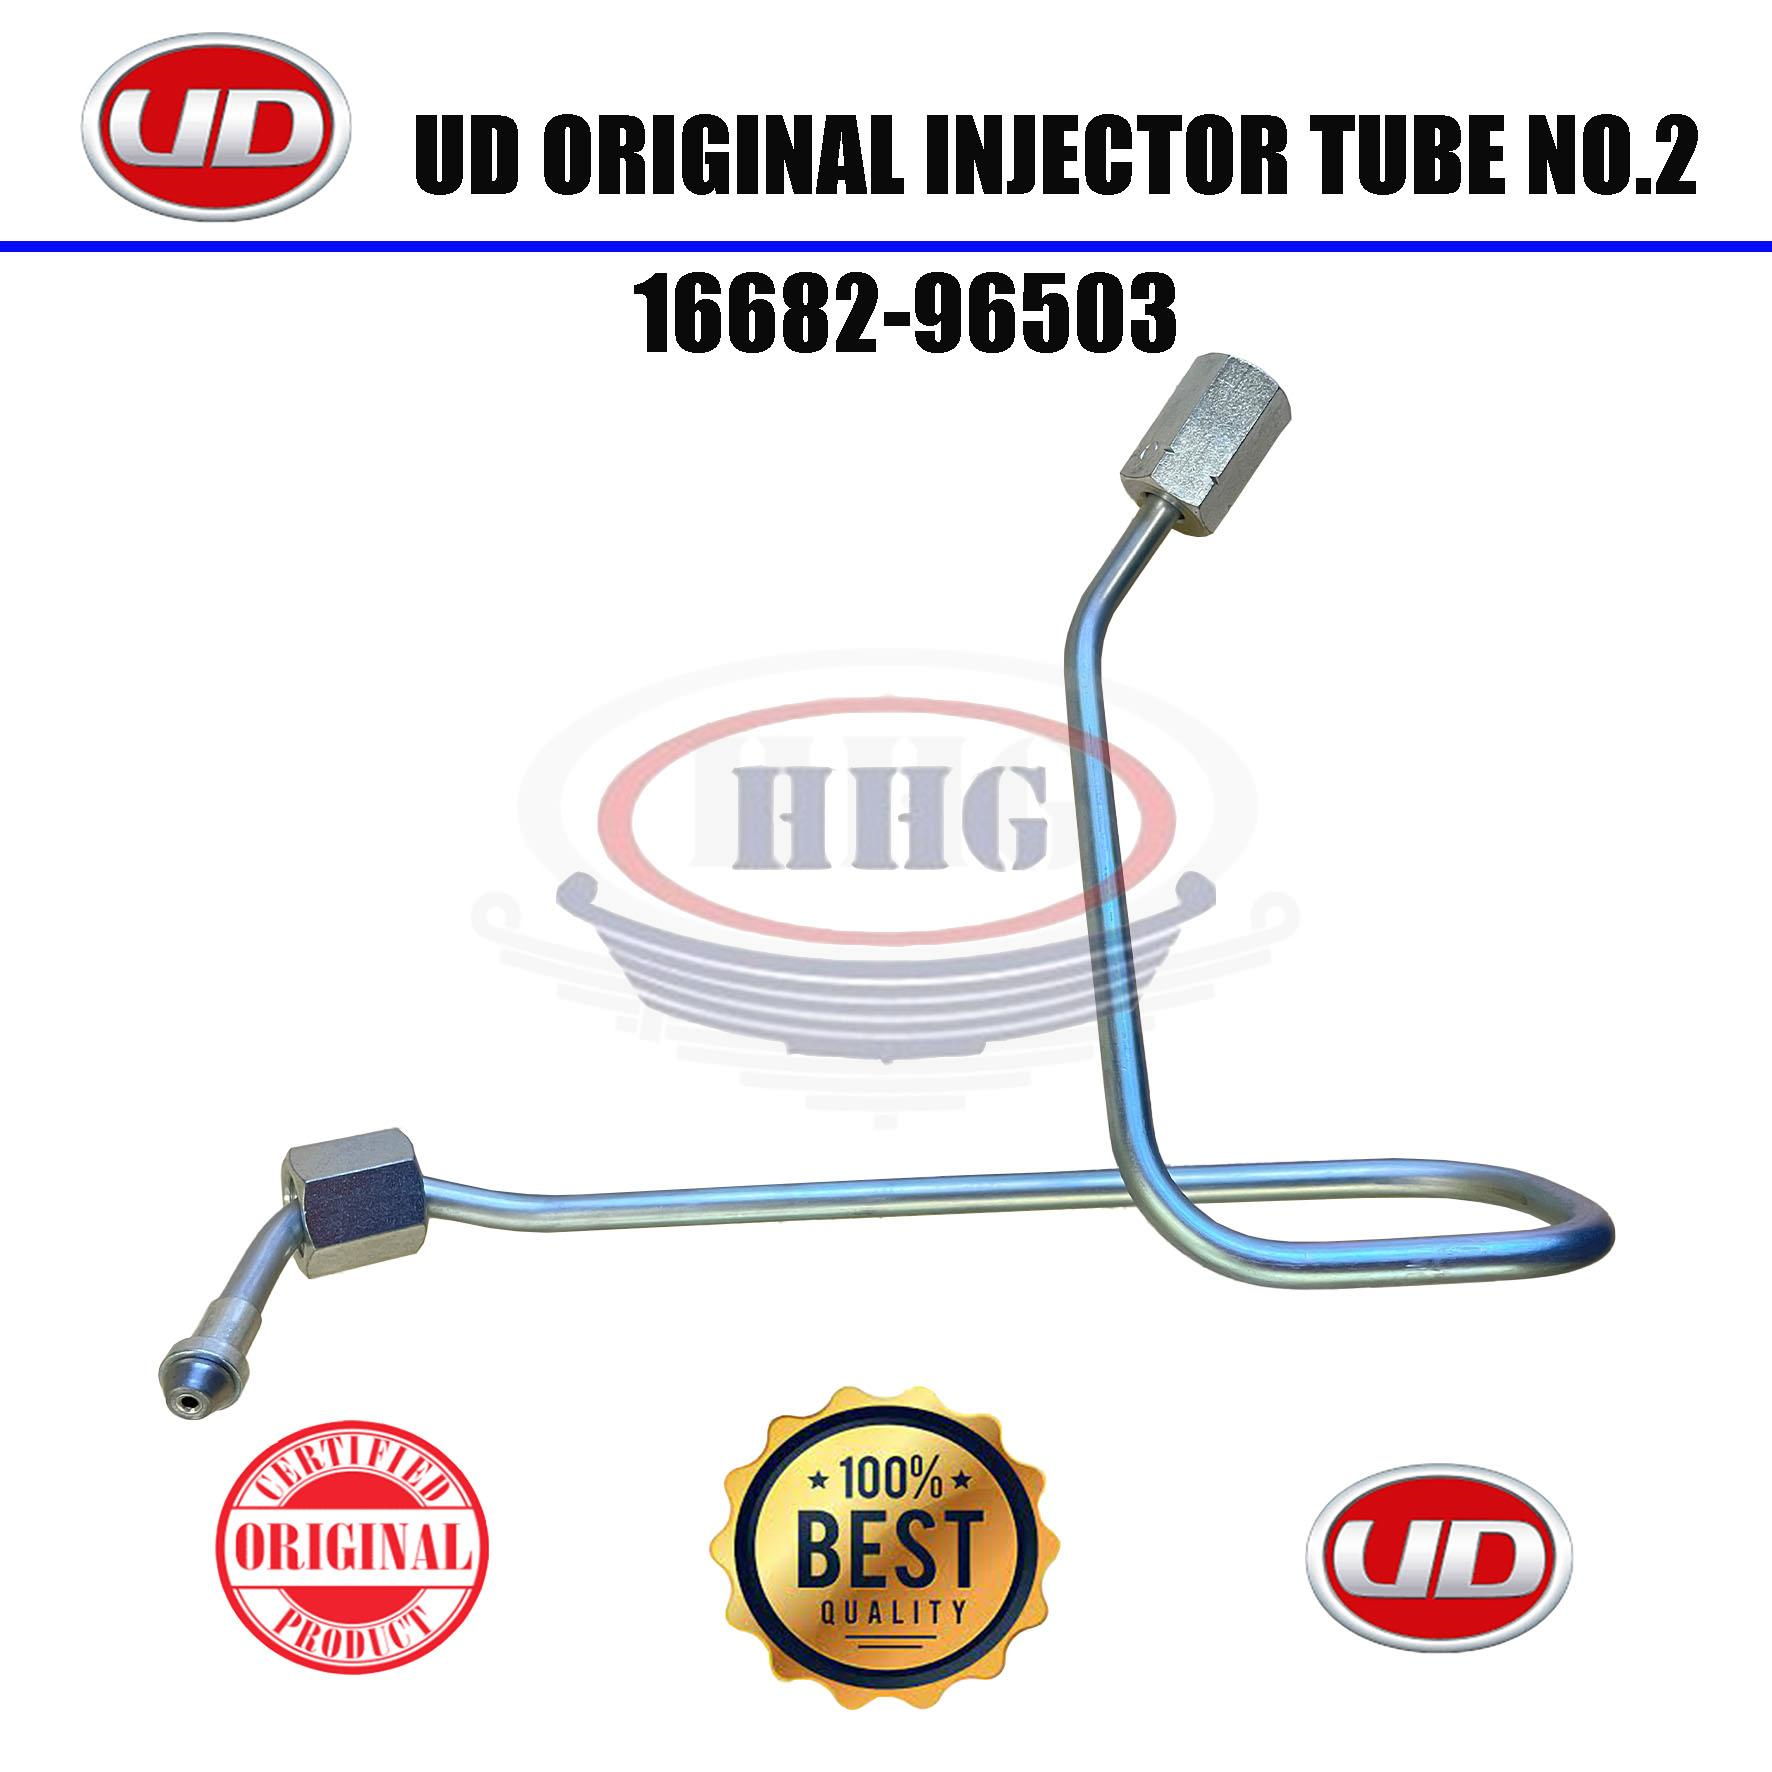 UD Original JA452 PF6T Injector Tube No.2 (16682-96503)